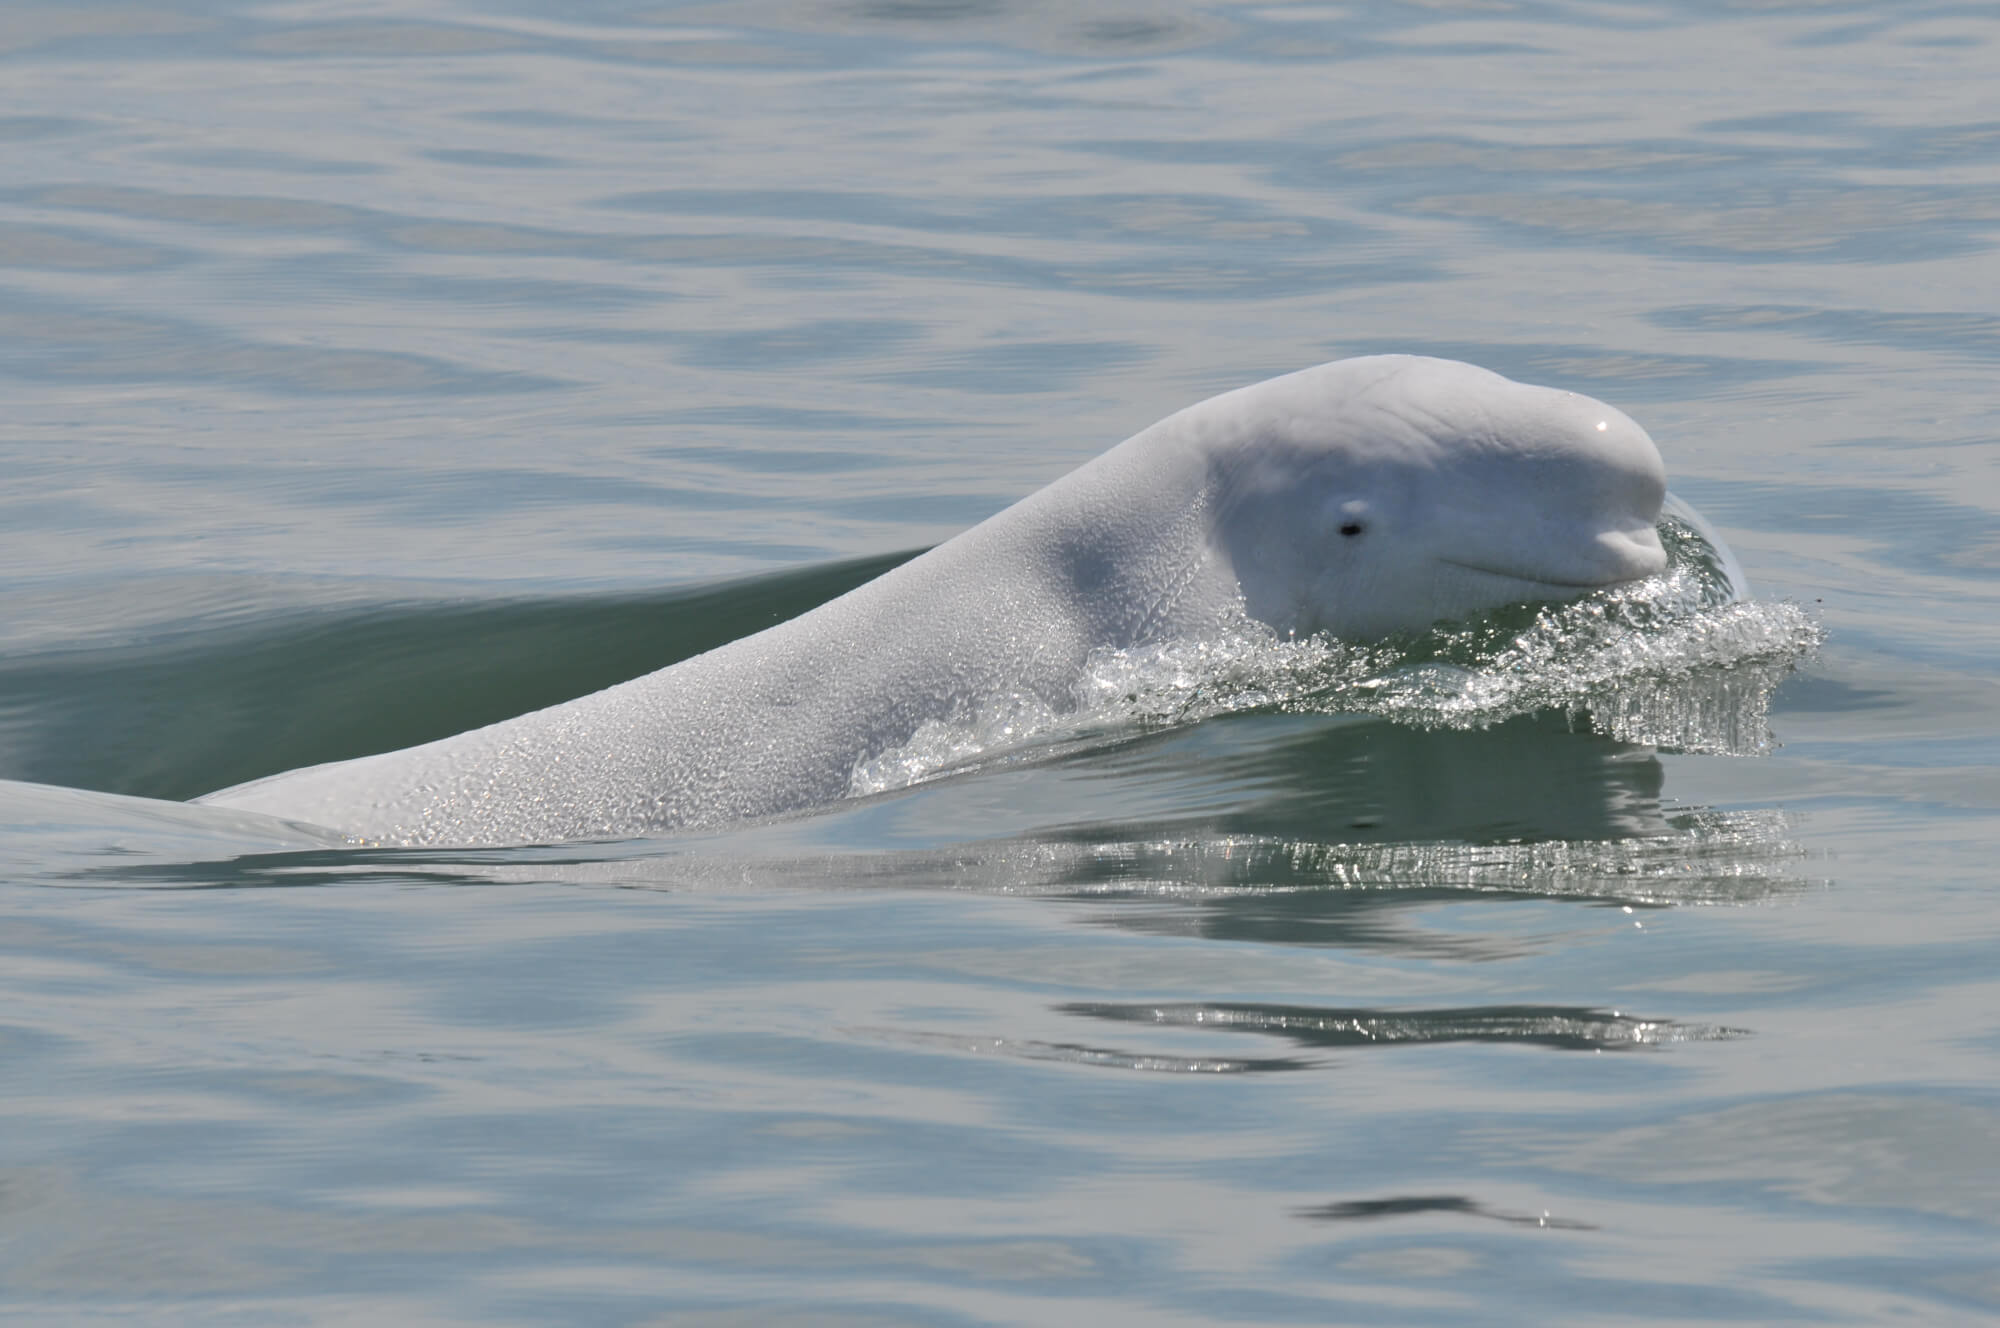 A beluga whale swimming